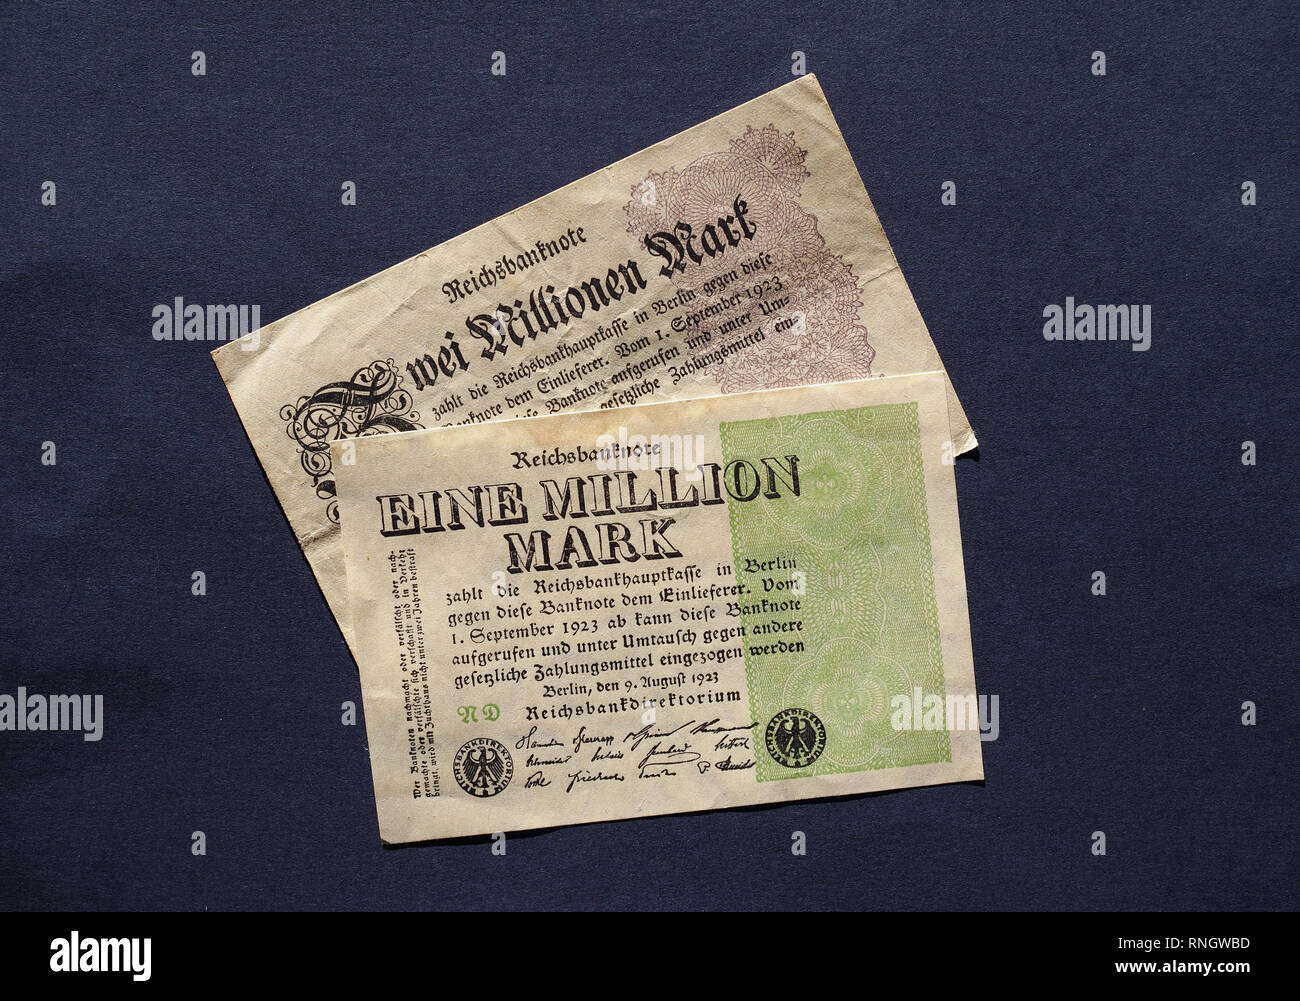 Eine und Zwei Million Mark (meaning One and Two Million Mark) year 1923 banknotes inflation money from Weimar Republic Stock Photo